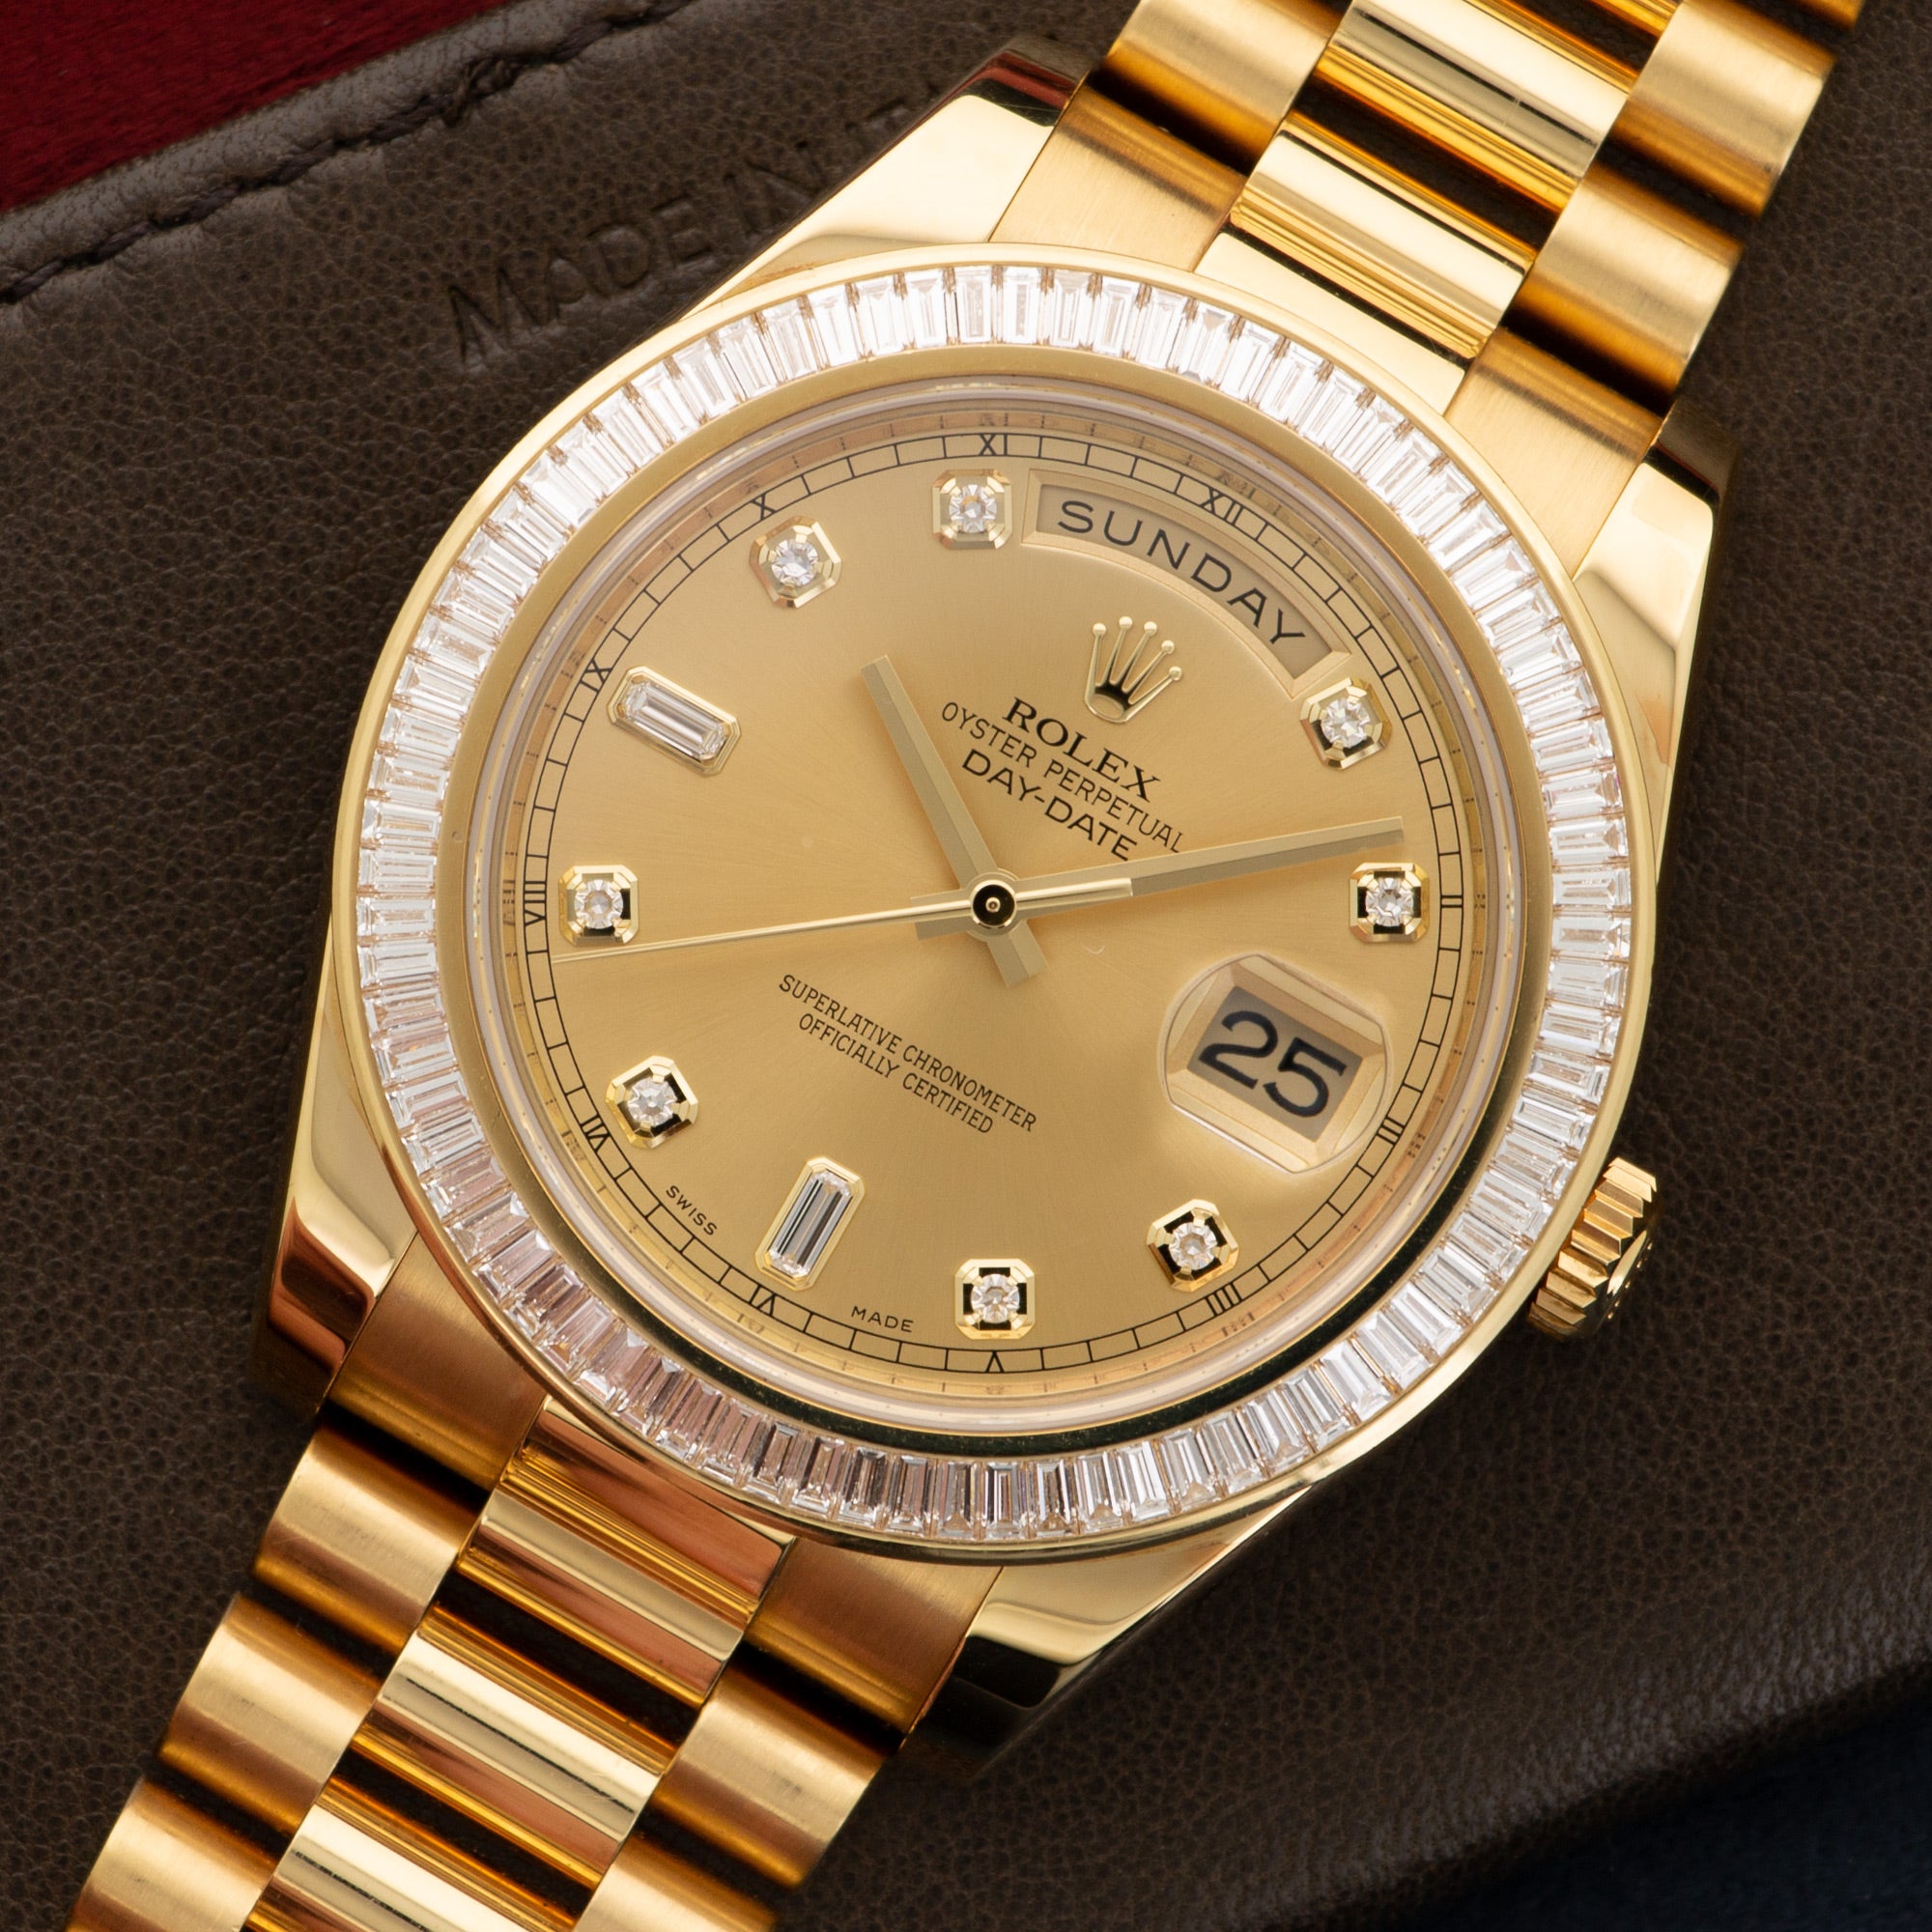 Rolex - Rolex Yellow Gold Day-Date II Baguette Diamond Watch Ref. 218398 - The Keystone Watches